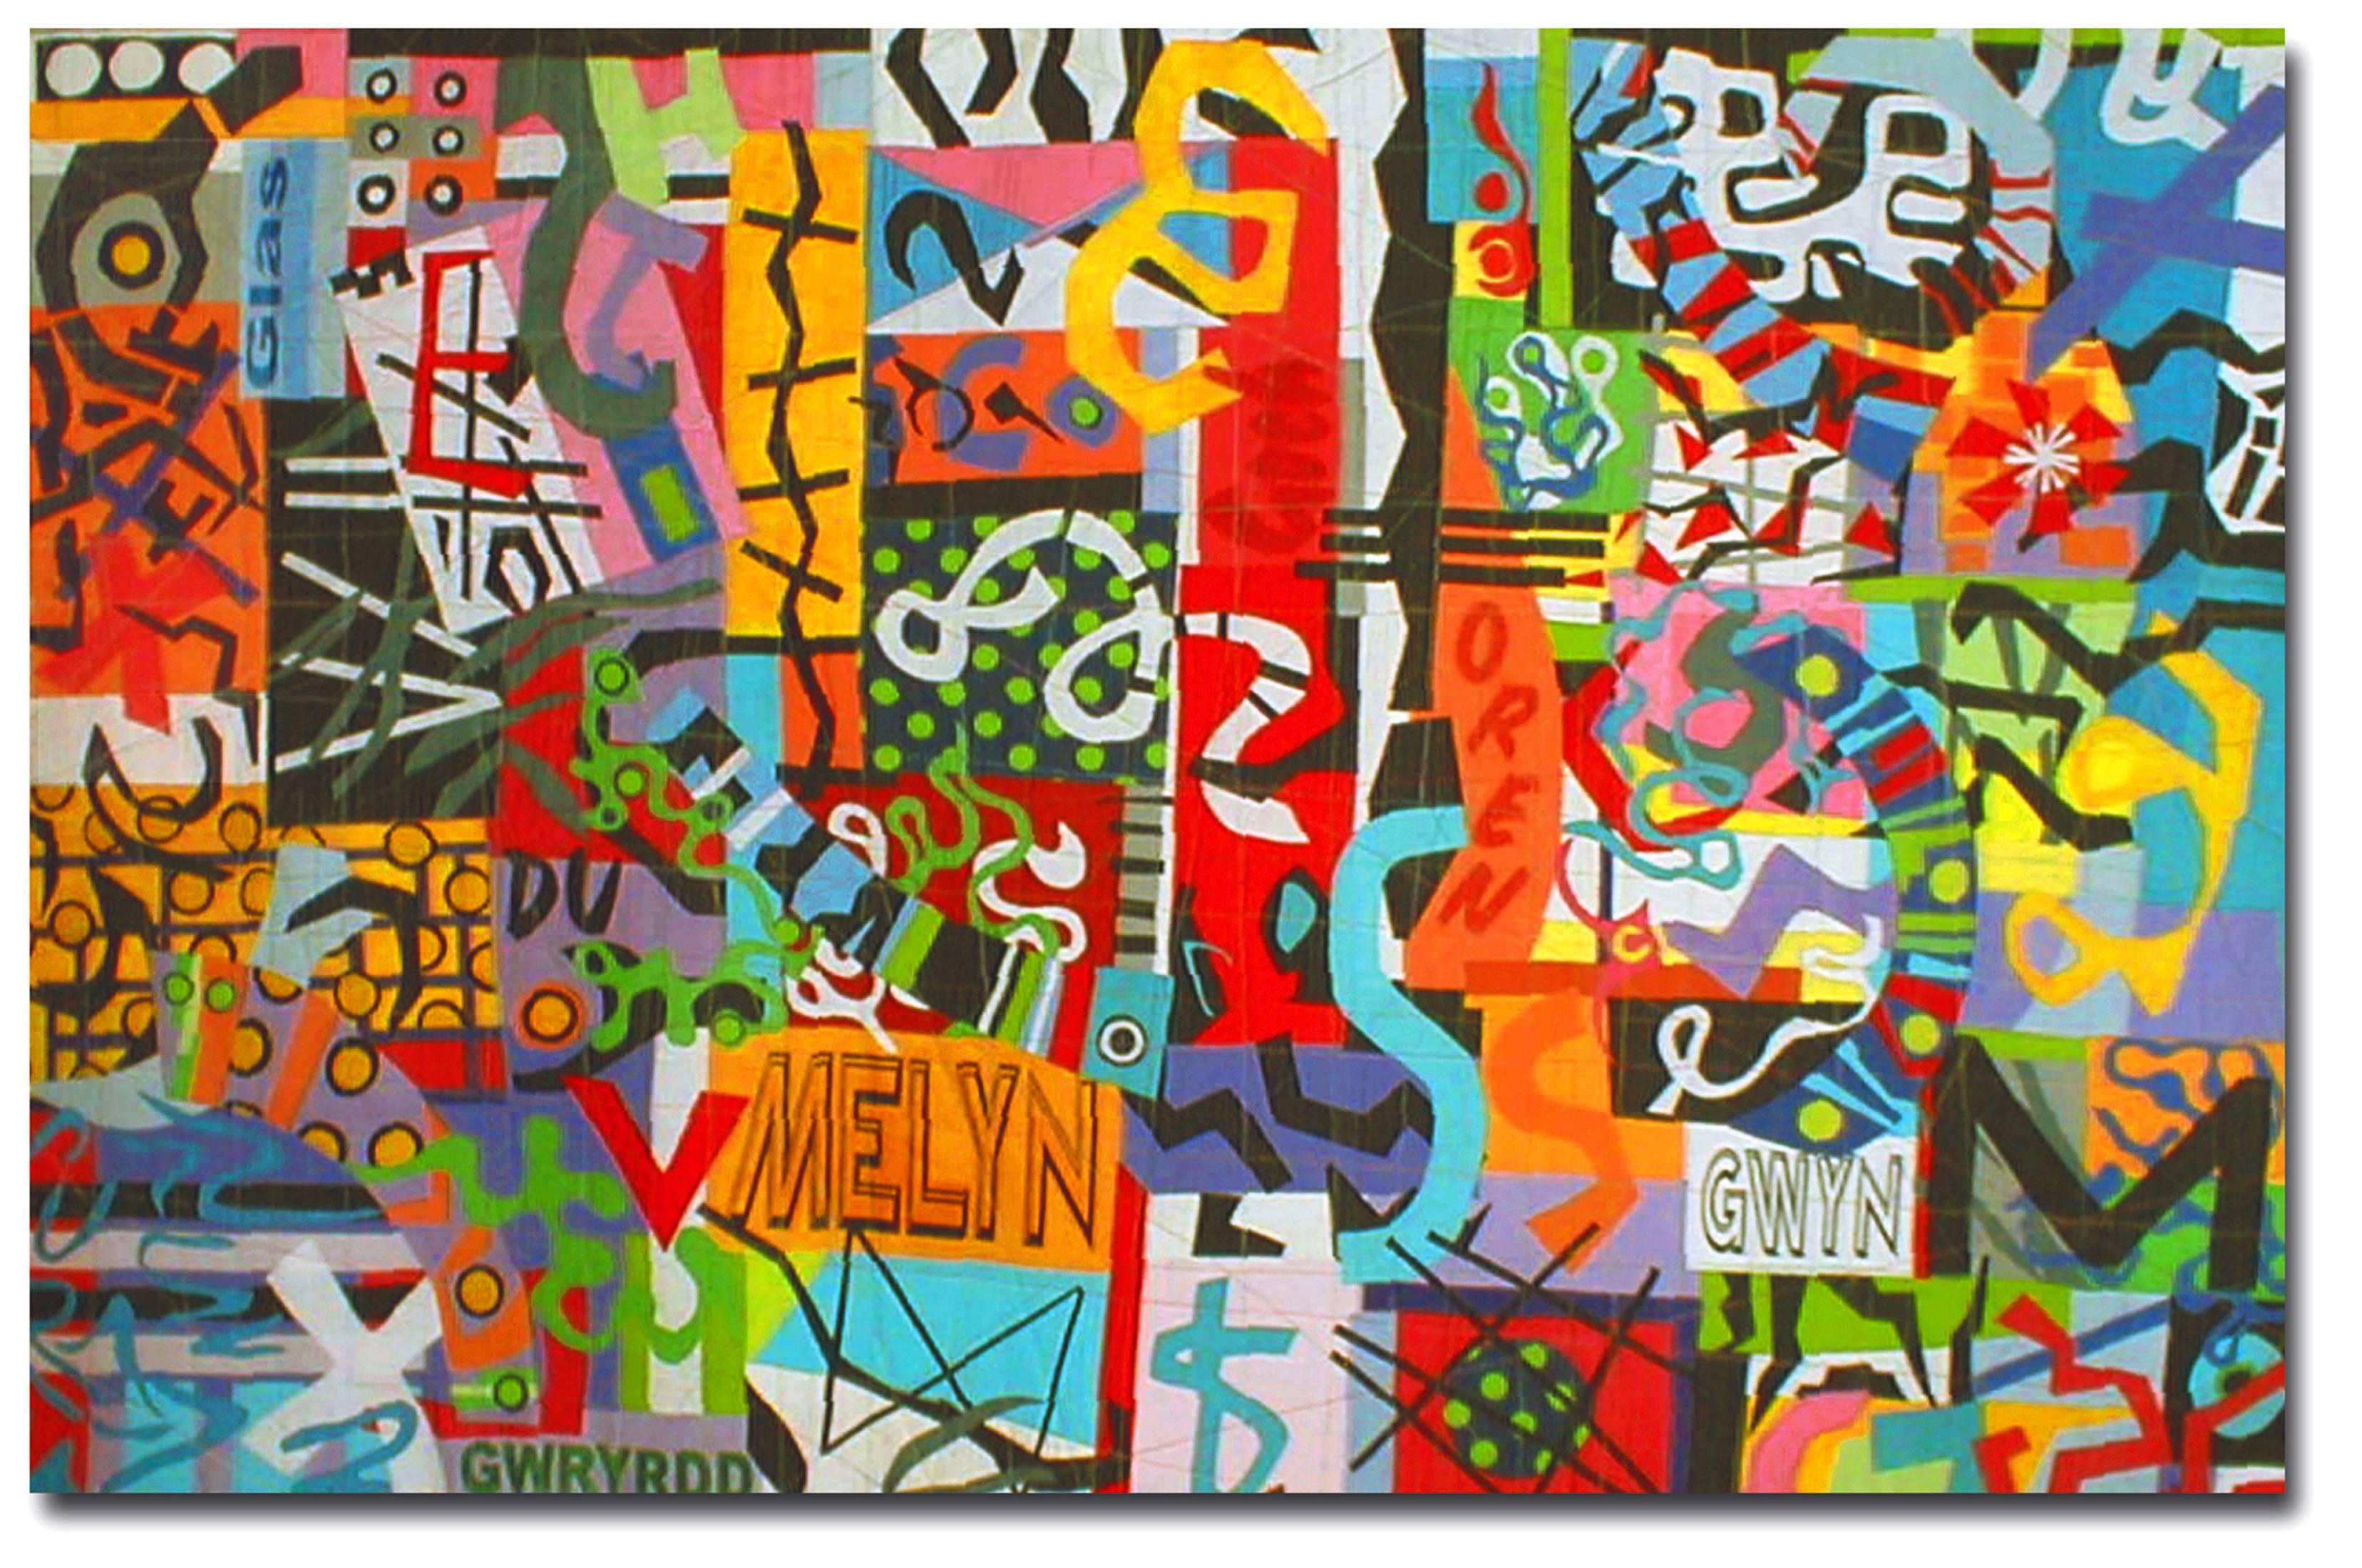 Taffiti Graffiti, Contemporary Quilt - Mixed Media Art by Bethan Ash